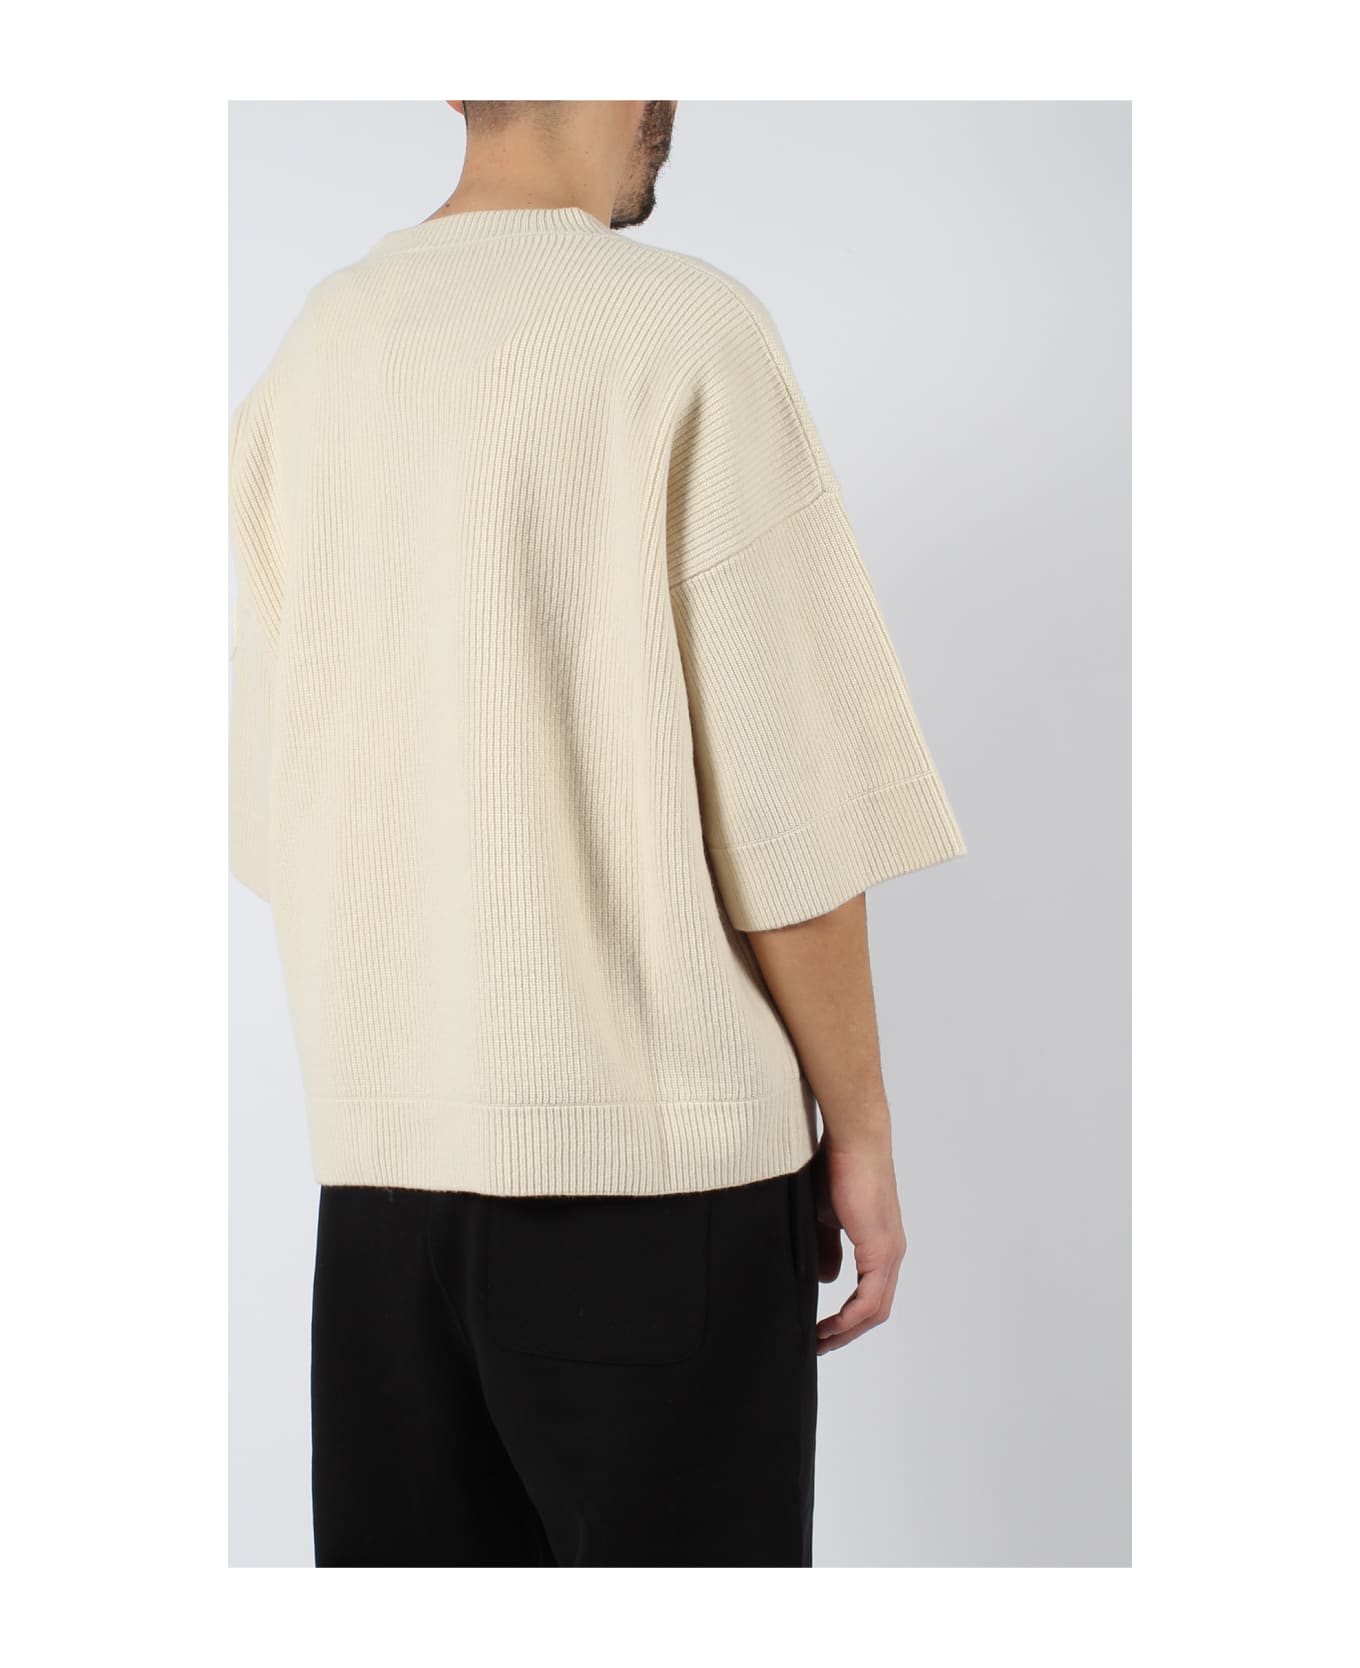 Moncler Genius Crewneck Ss Sweater - White